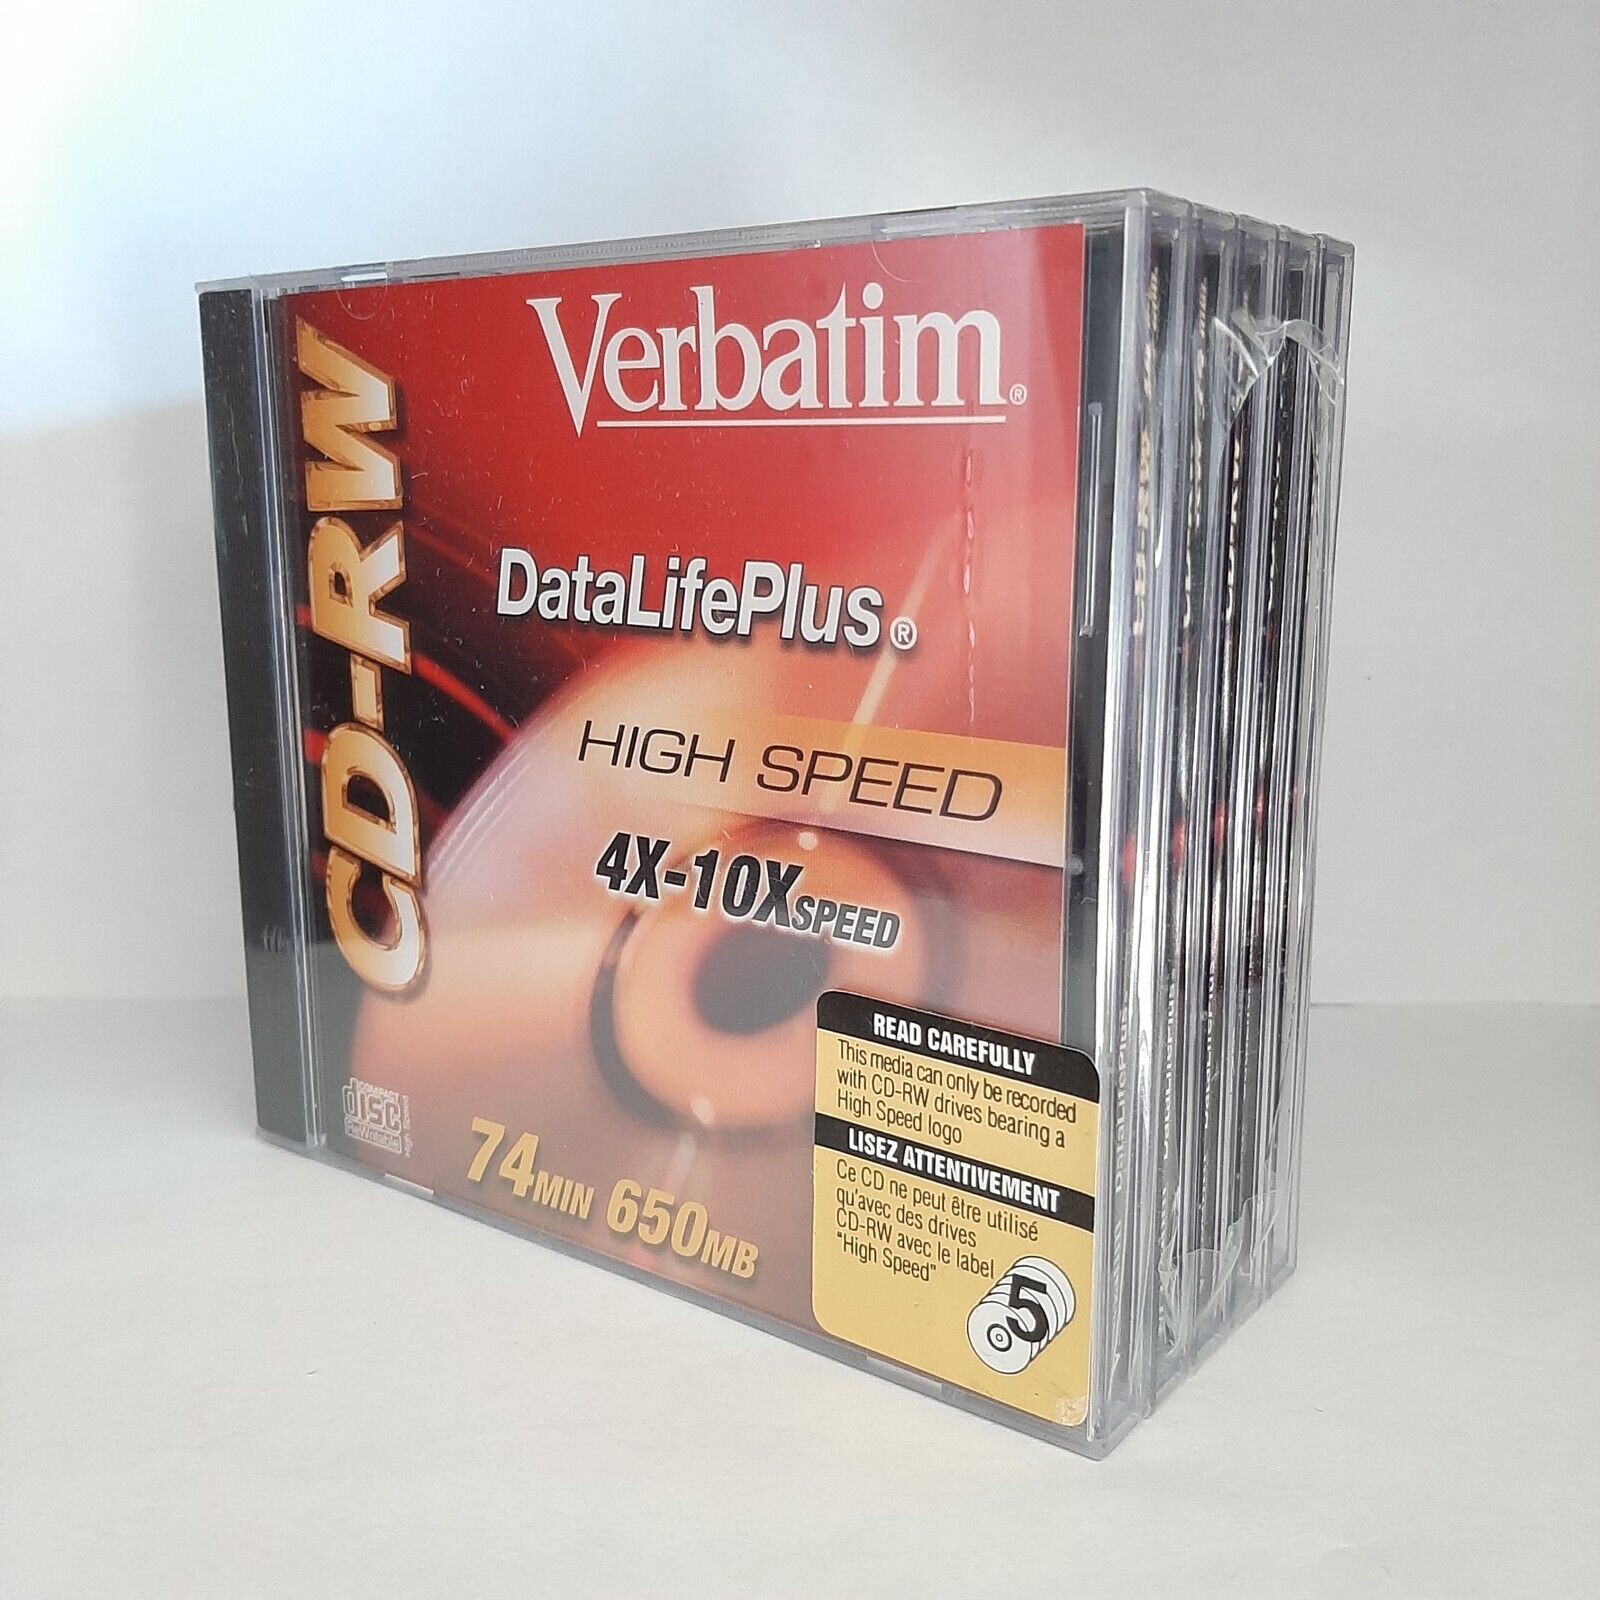 NEW Verbatim Datalifeplus CD-RW High Speed 4x-10x 74min 650mb Sealed Pack of 5